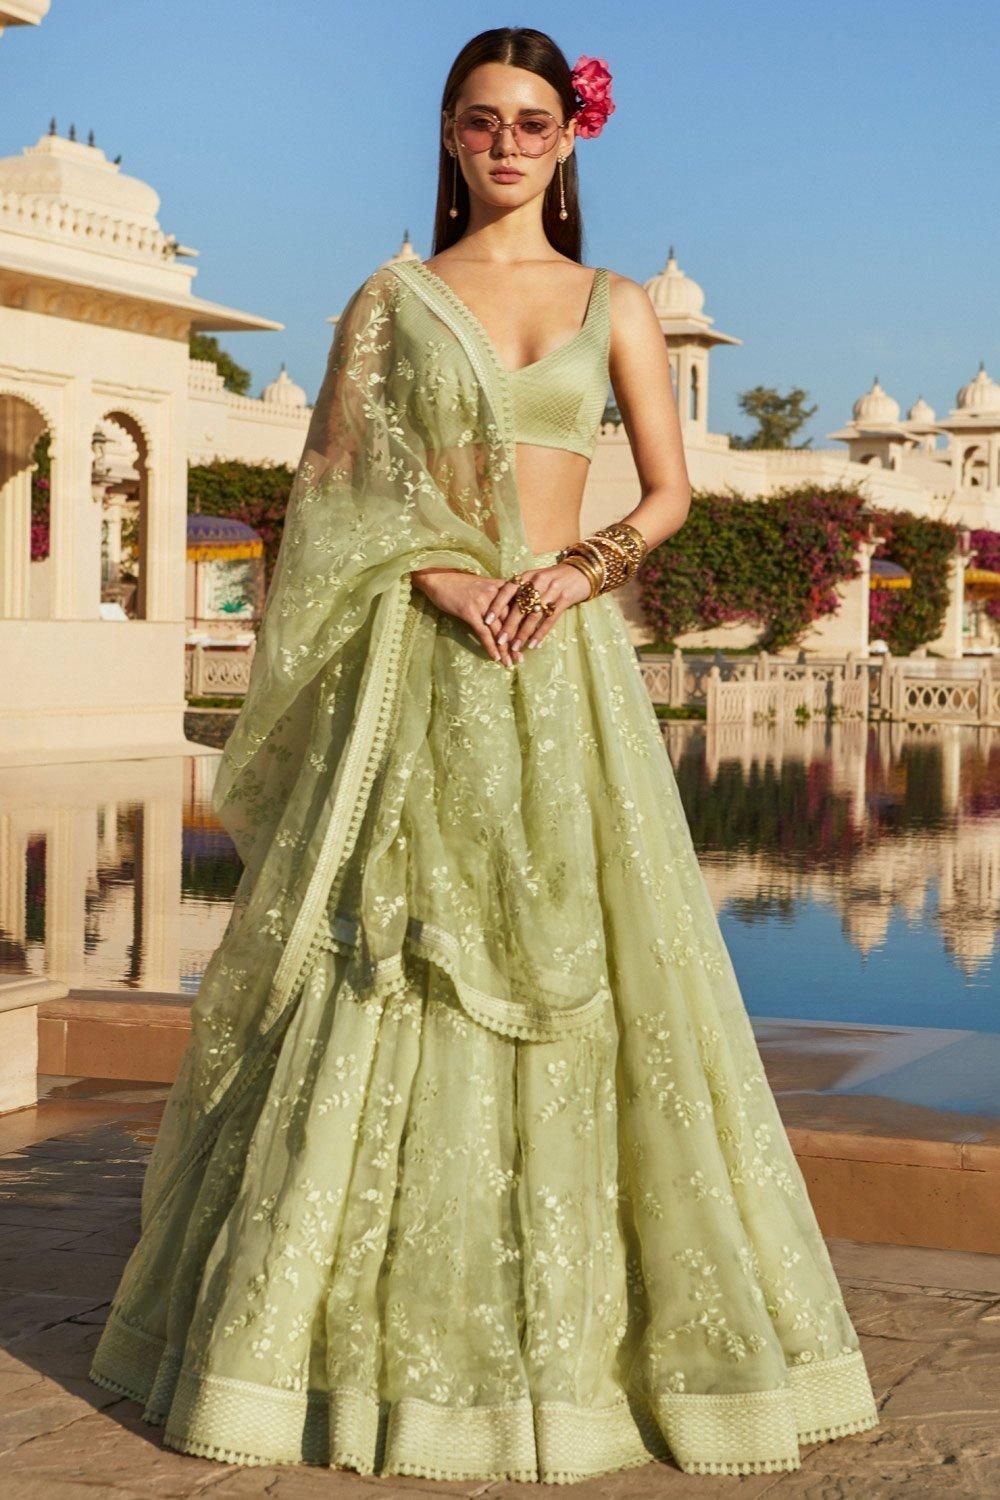 Breathtaking Sabyasachi lehenga for Meera Chopra's wedding [Photos] |  Fashion News - News9live